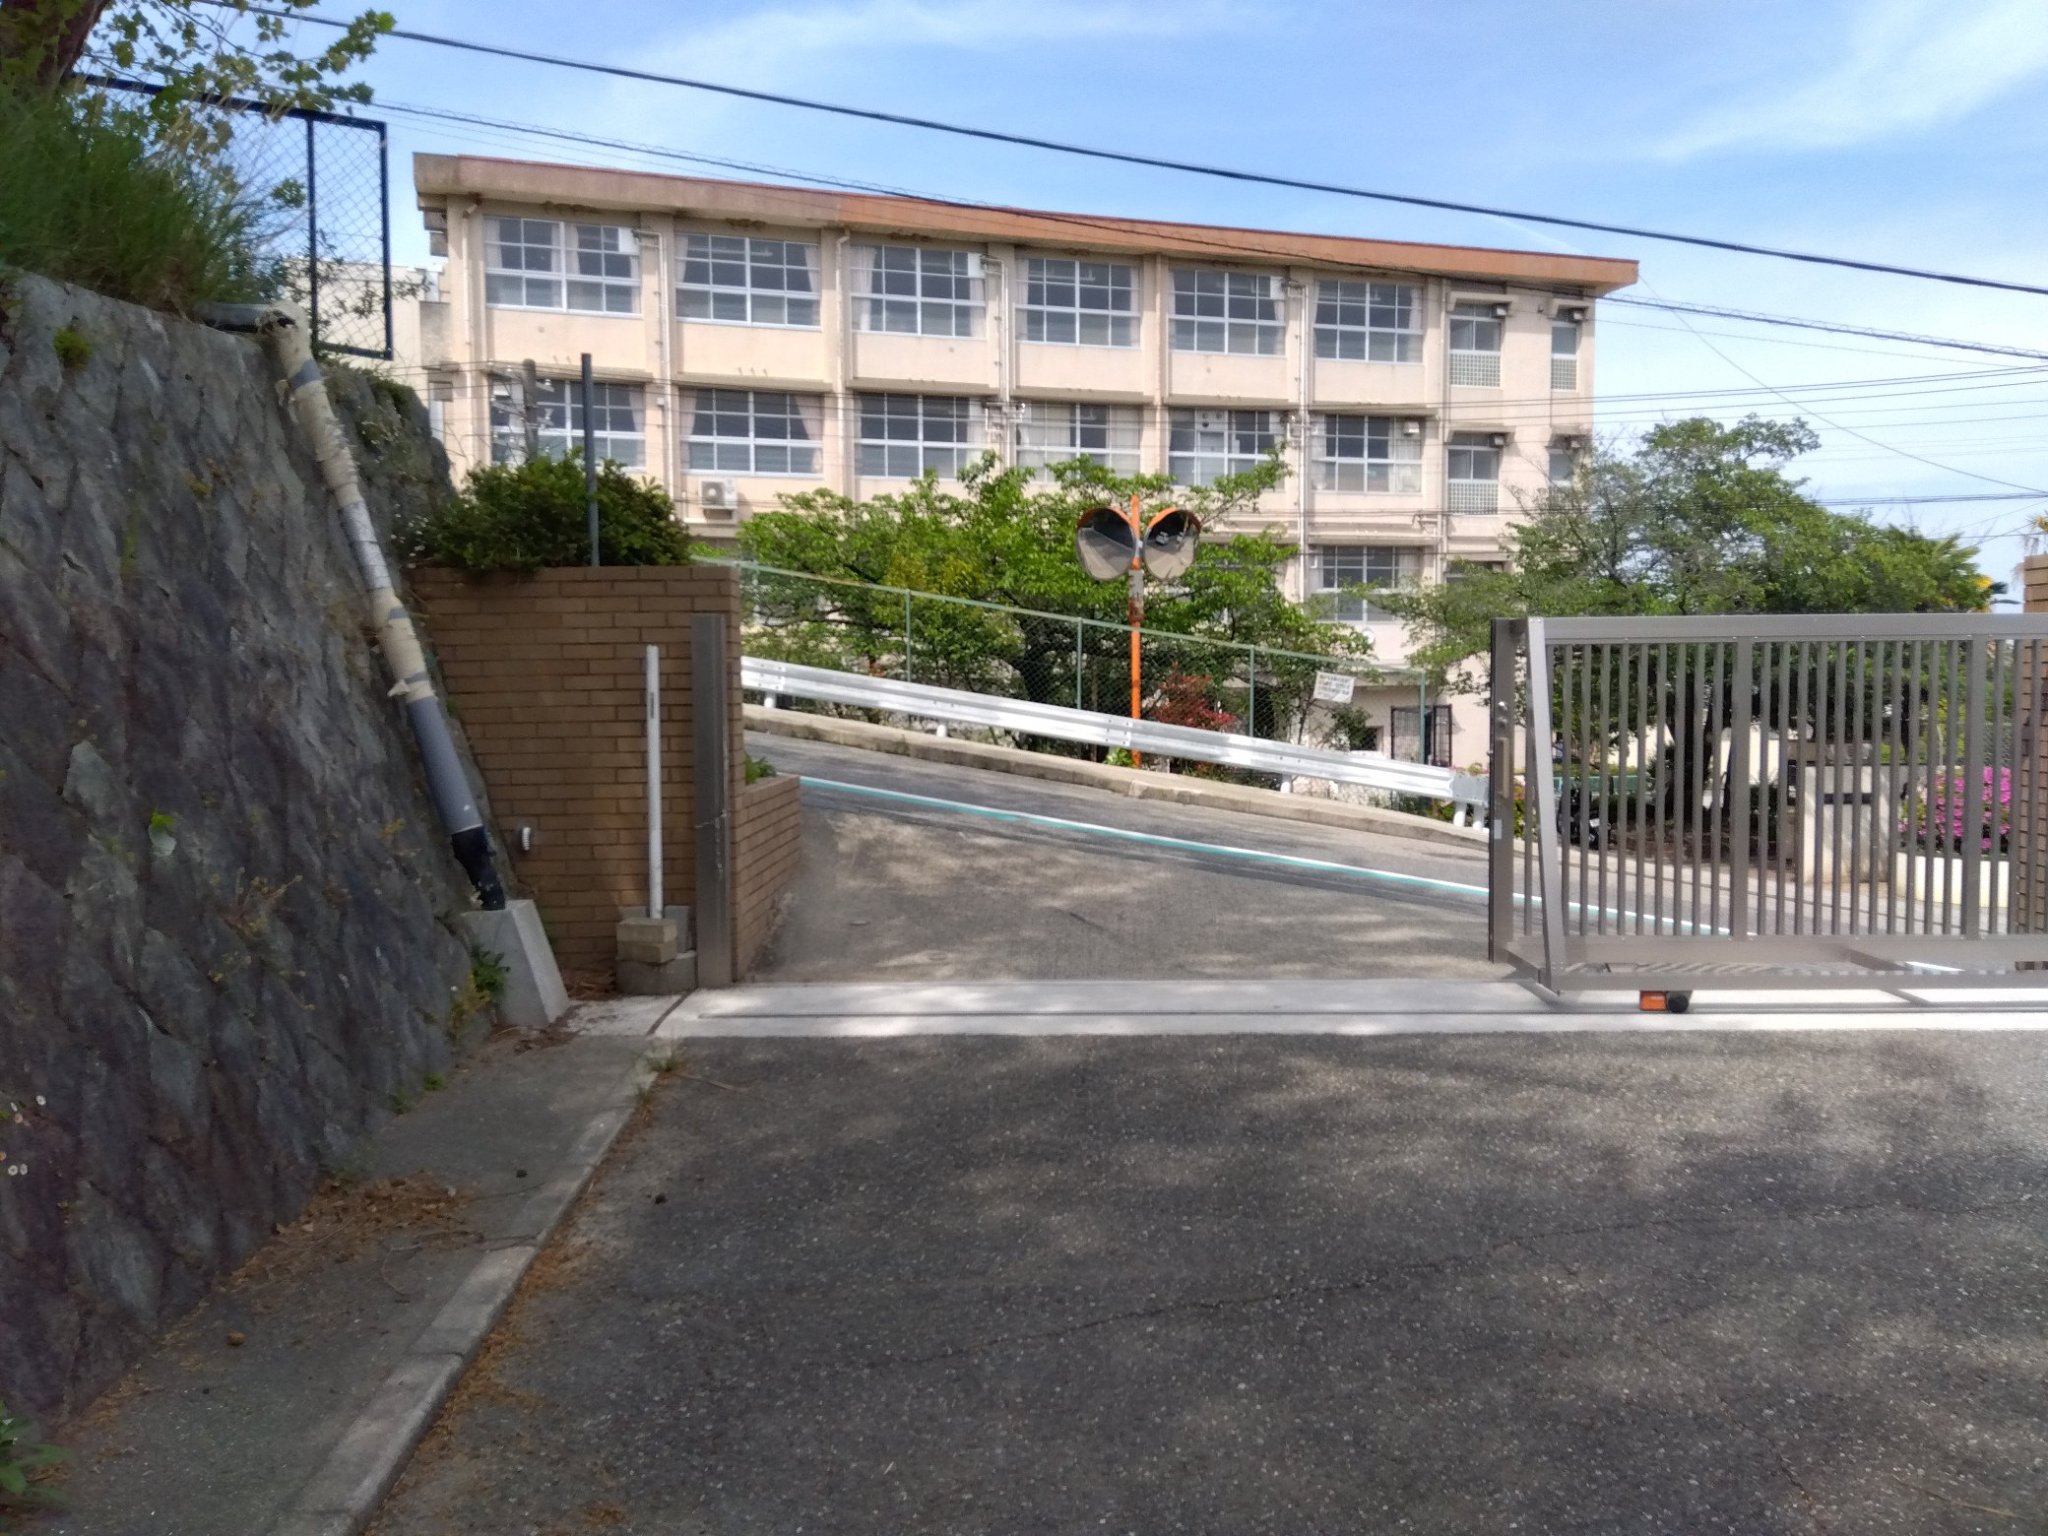 Северная старшая школа префектуры Осаки 県立西宮北高等学校 - Страница 3 0649f1a496f92becc2ad2dbb2fb49a2253e914f2